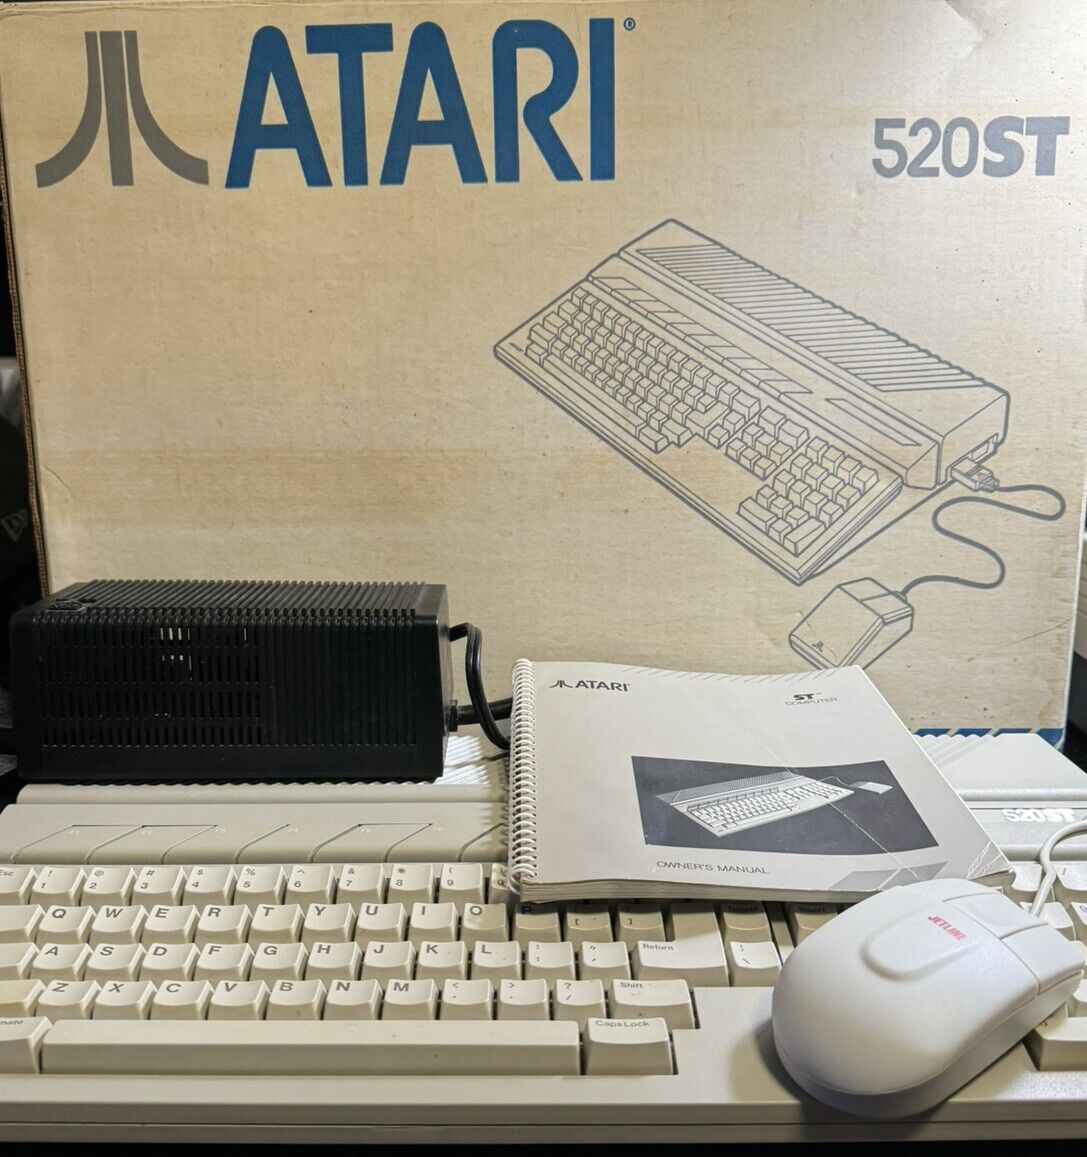 Atari 520 ST STM Keyboard Computer w/Power Supply & Original Box, Manual, Mouse